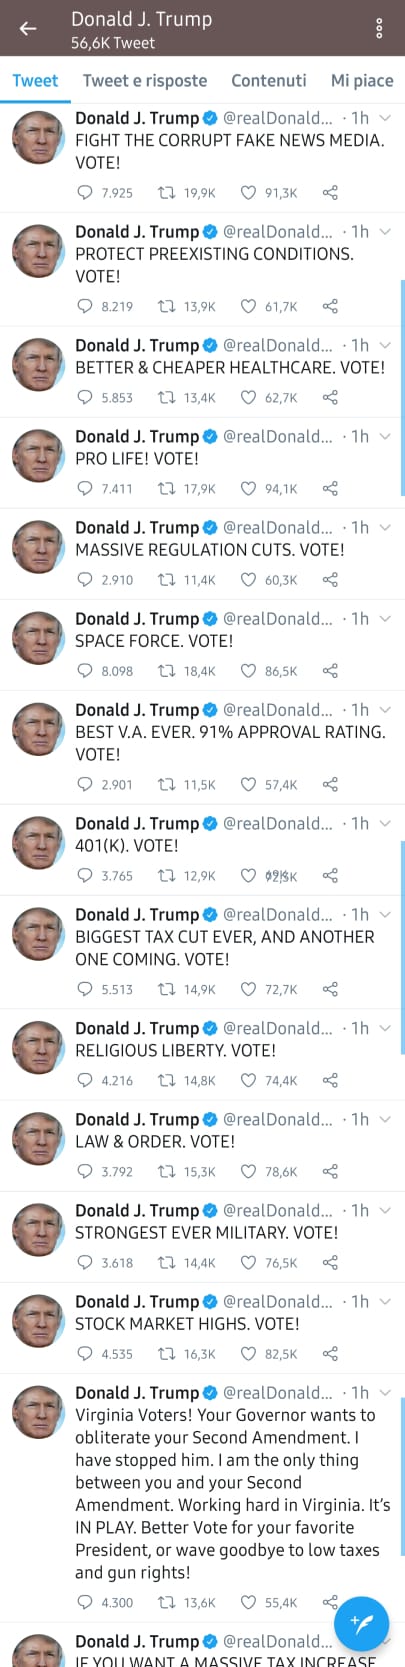 Donal Trump tweet